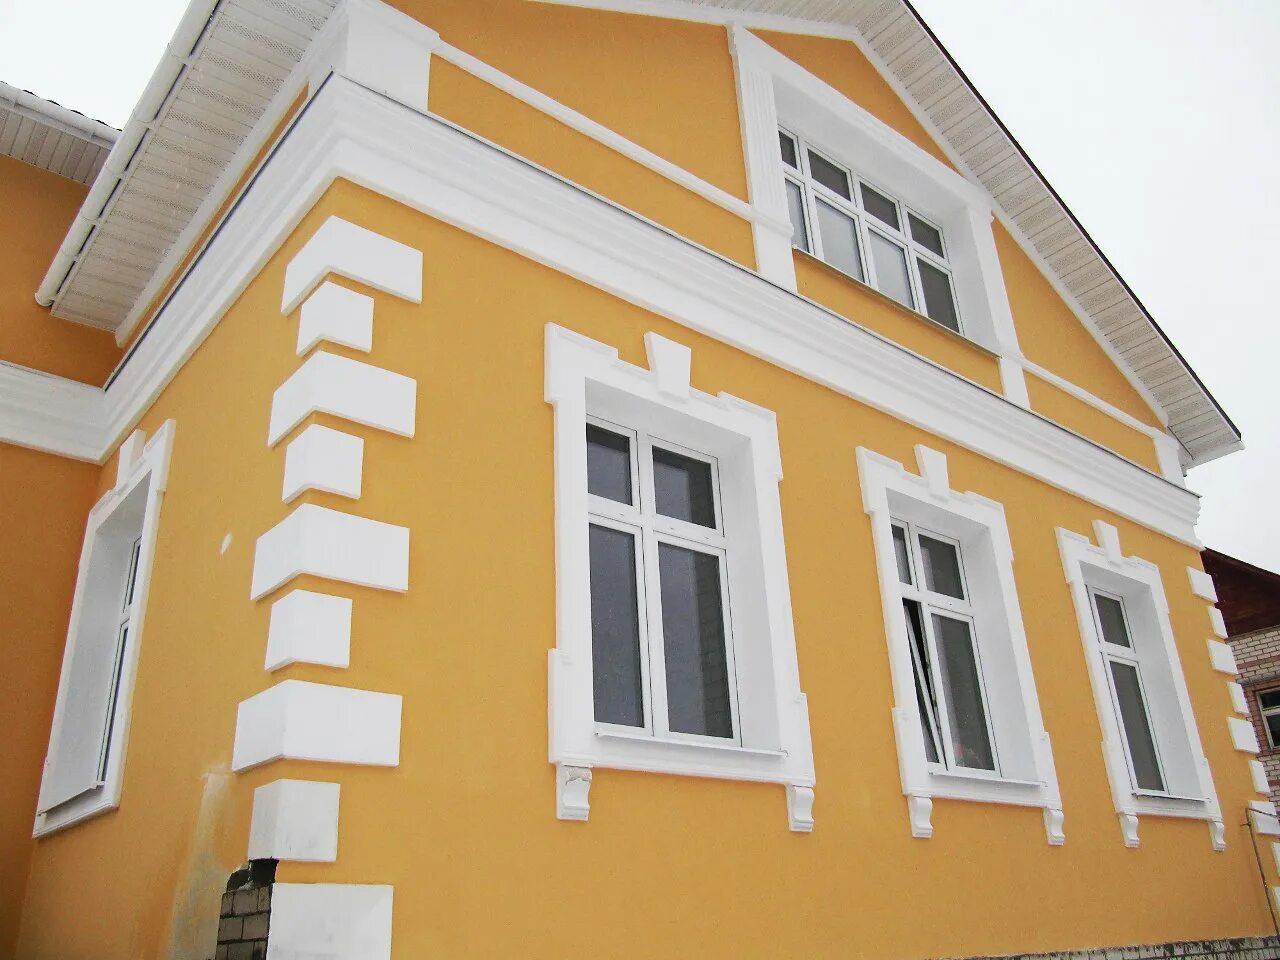 Услуга фасад. Краска для фасадов домов. Покраска фасадов домов. Крашенный фасад дома. Покрасить фасад дома.